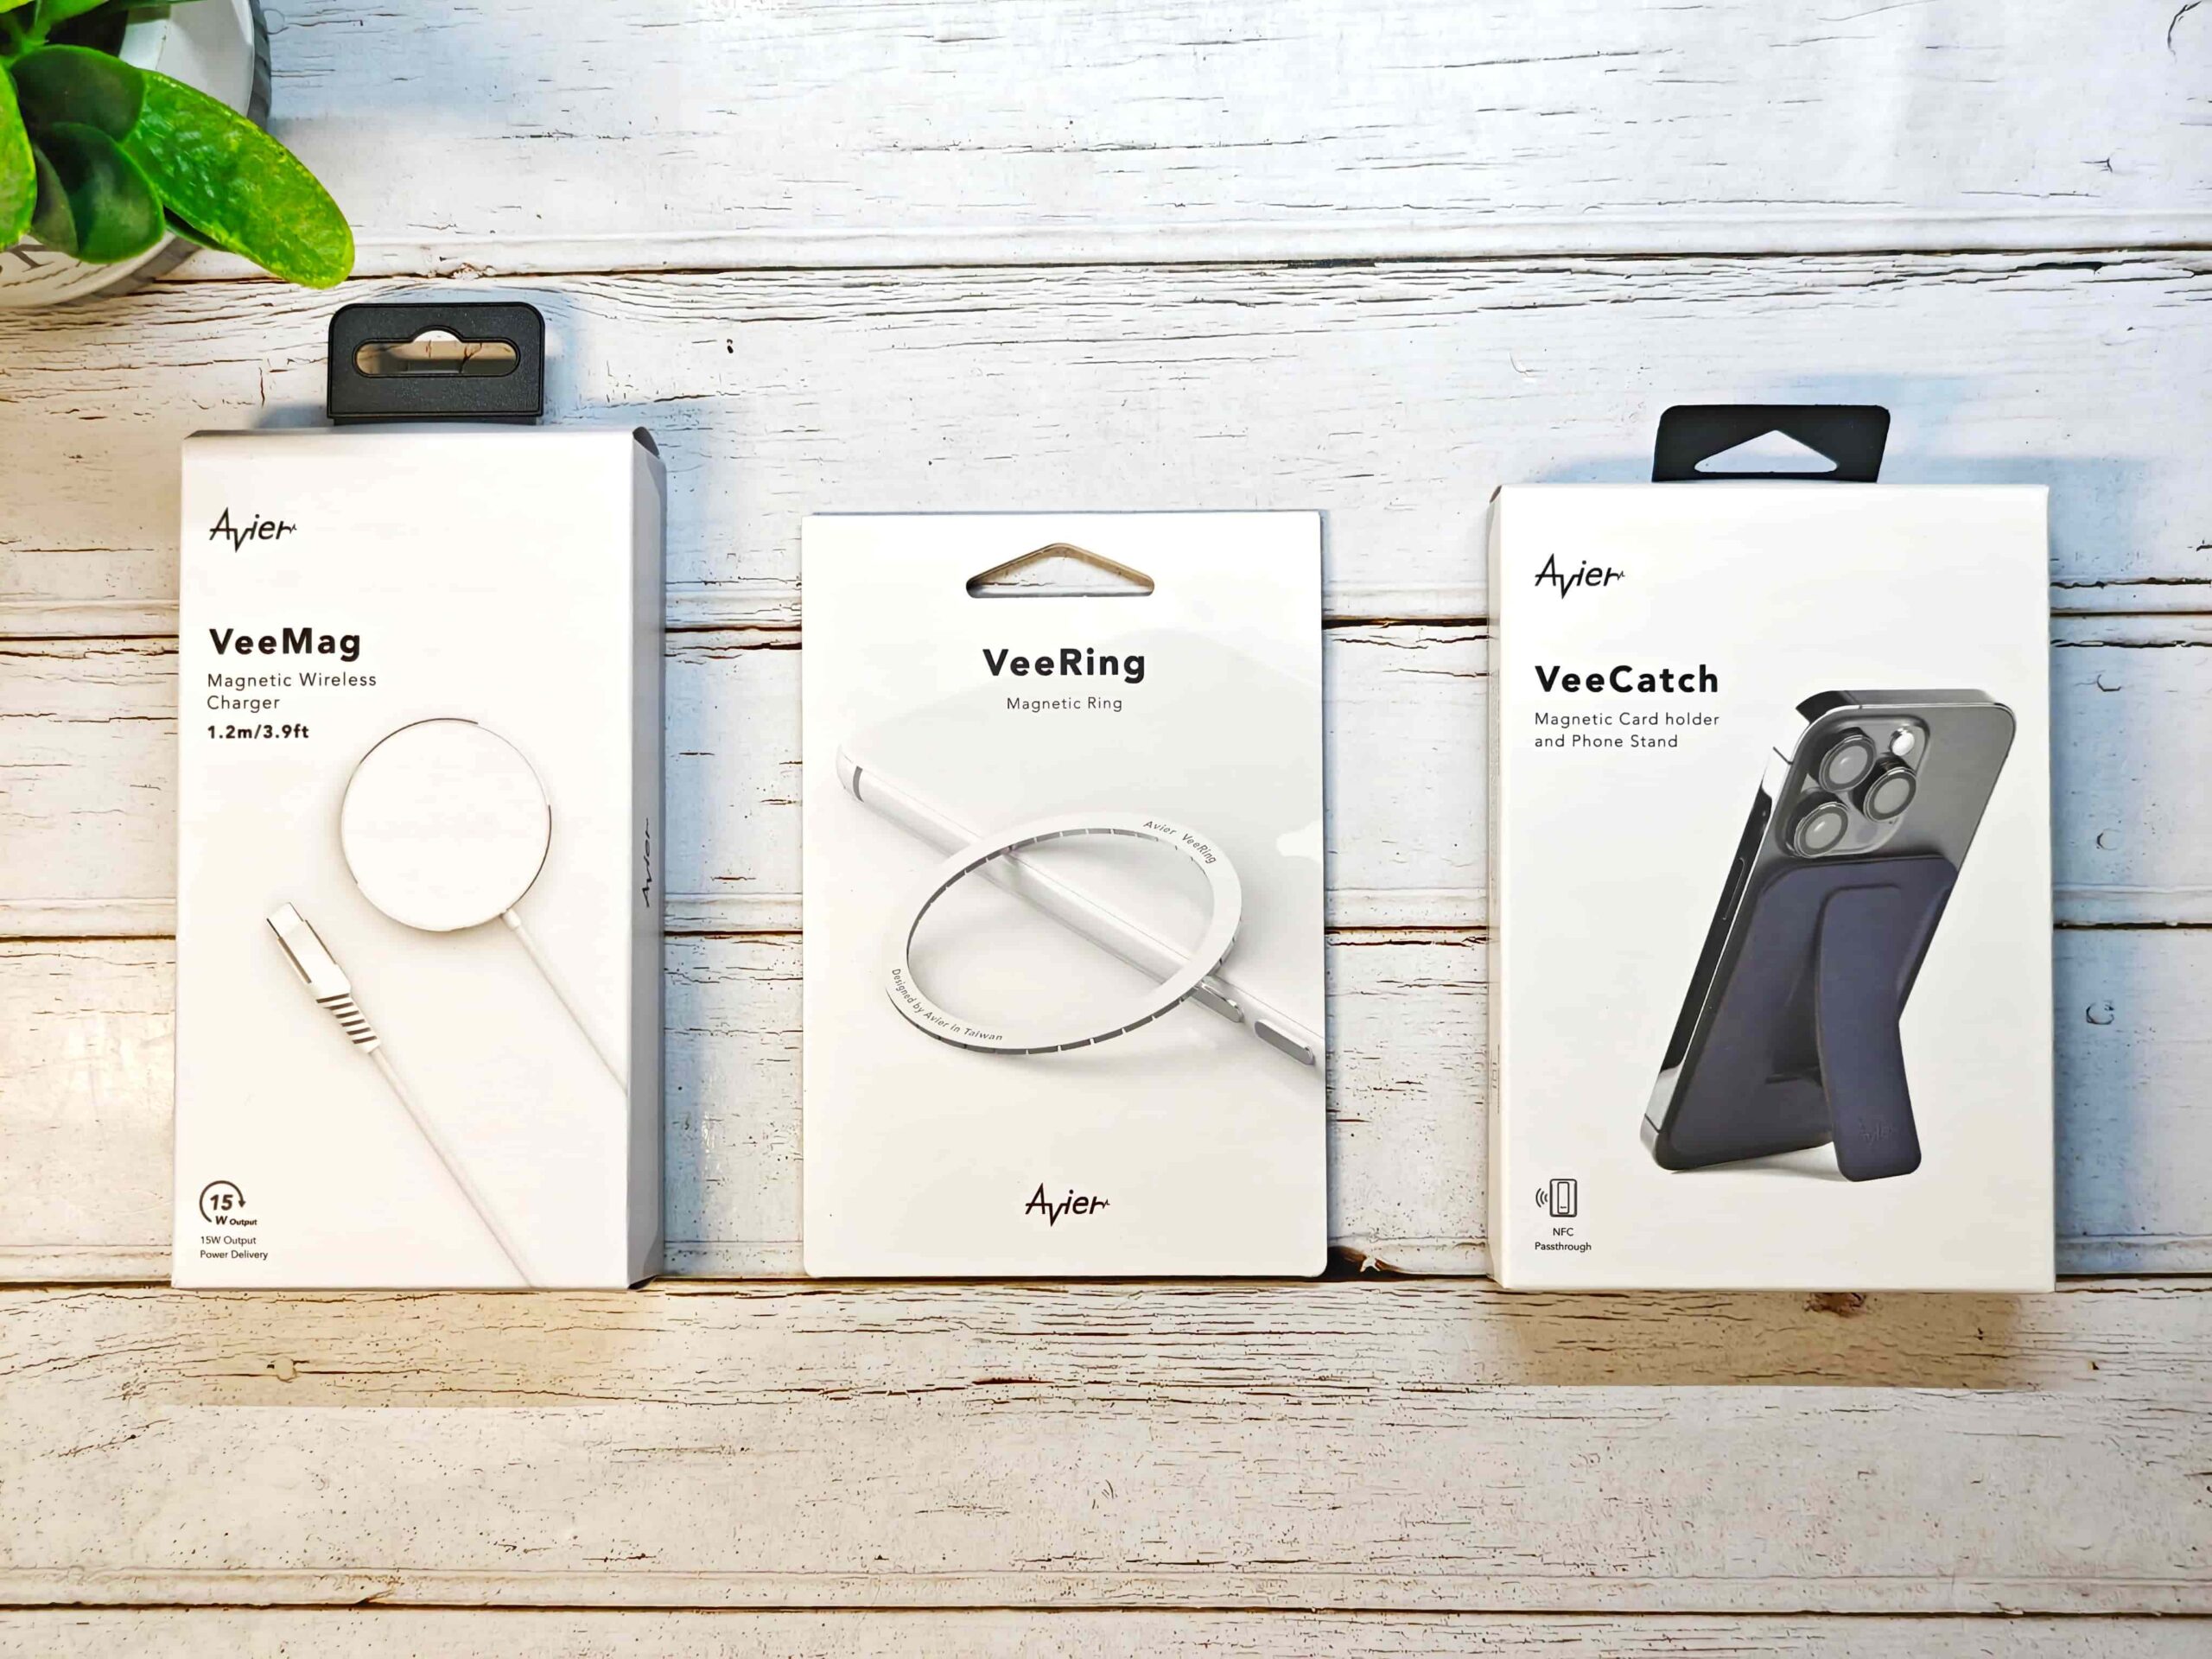 「 MagSafe 週邊開箱」Avier Vee 系列新品上市實測 – 精緻輕巧、便利生活